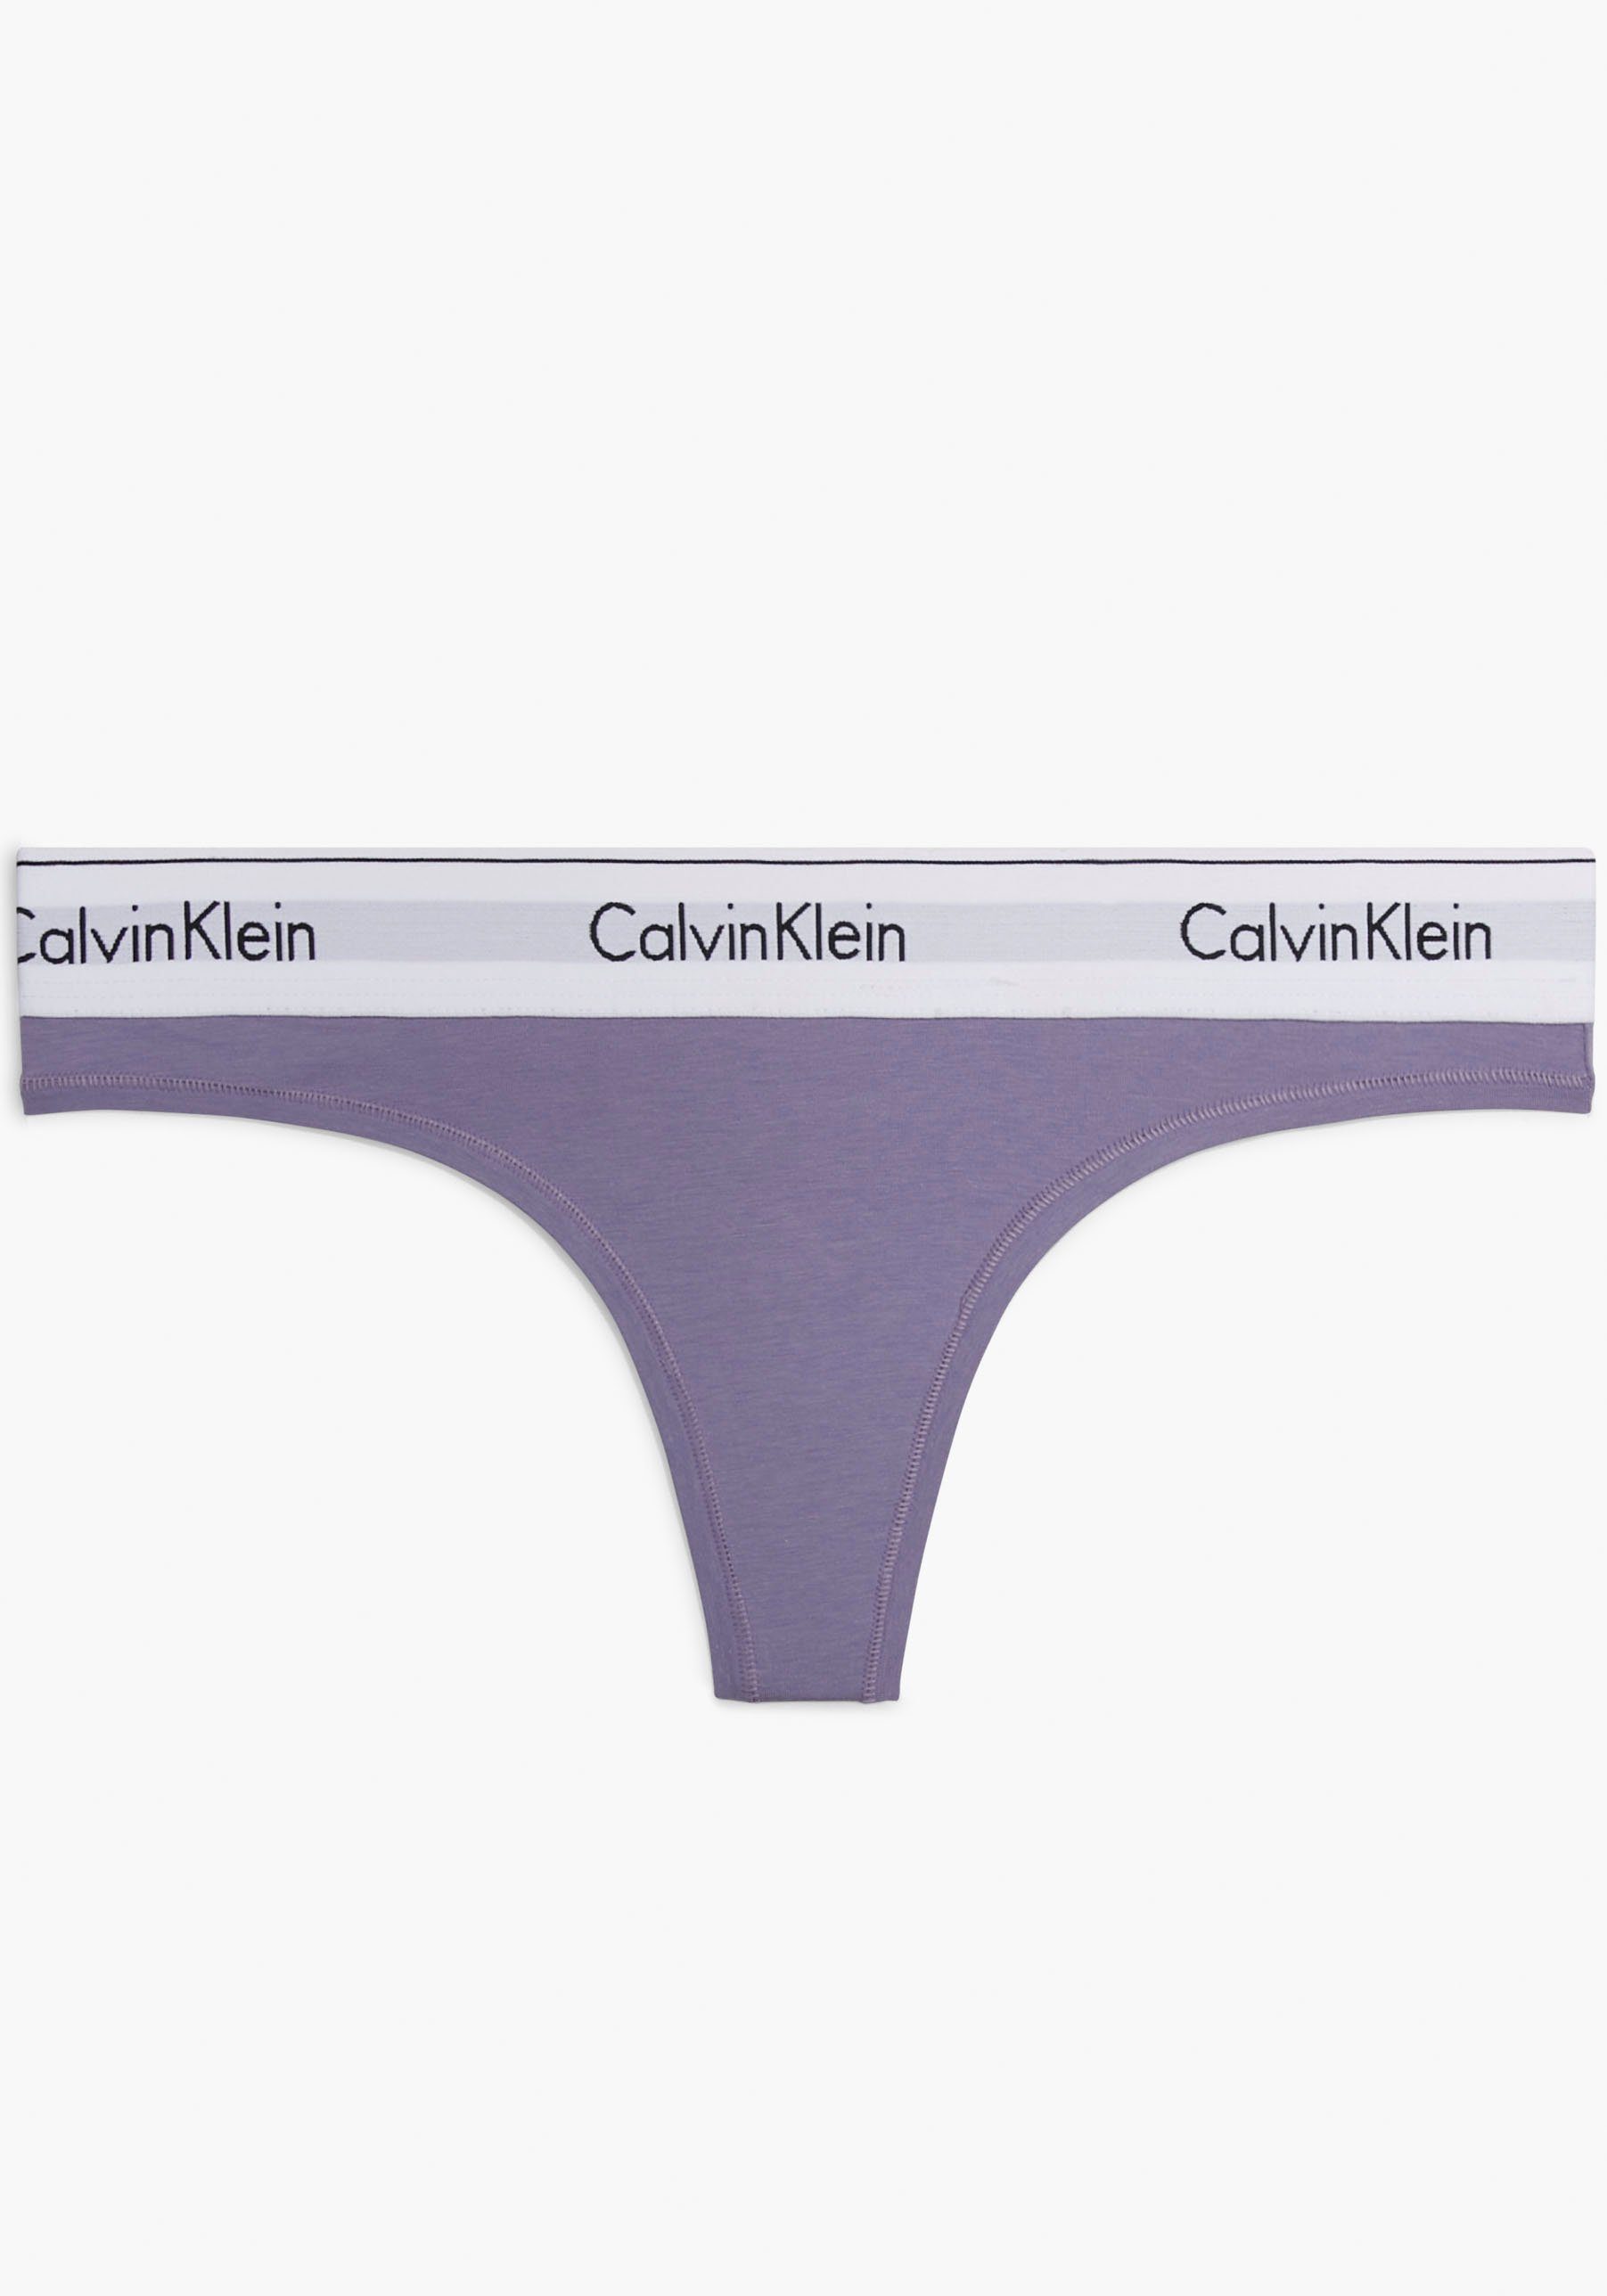 NU 20% KORTING: Calvin Klein T-string Modern Cotton met brede boord